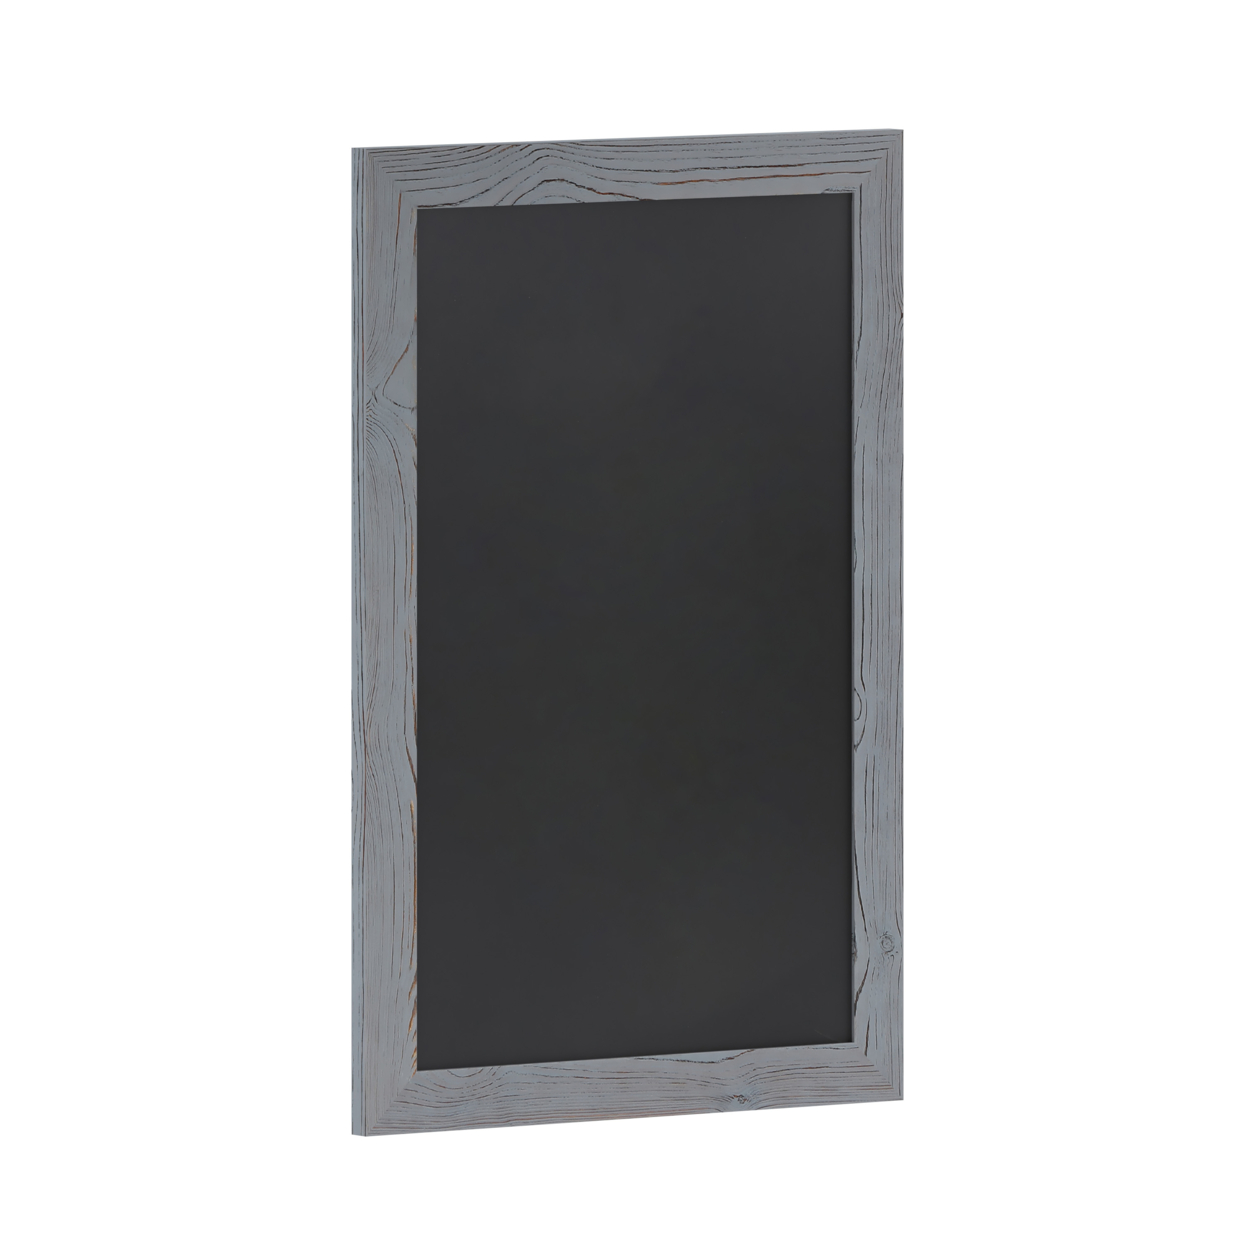 30 Inch Wall Hanging Chalkboard, Sleek Gray Wood Frame, Eraser